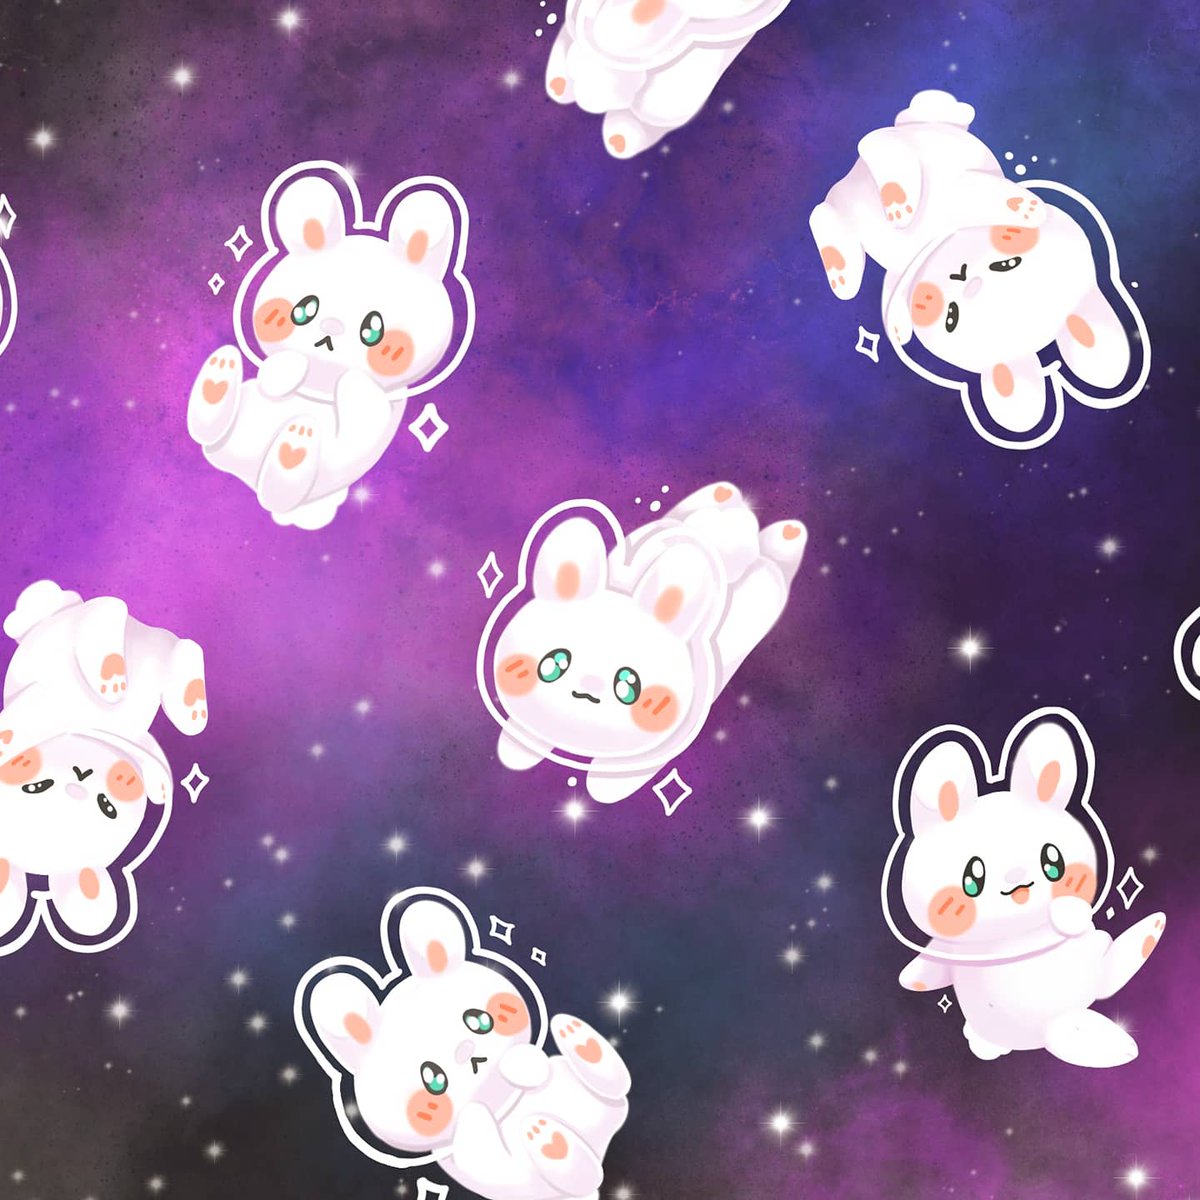 Space bunnies! 